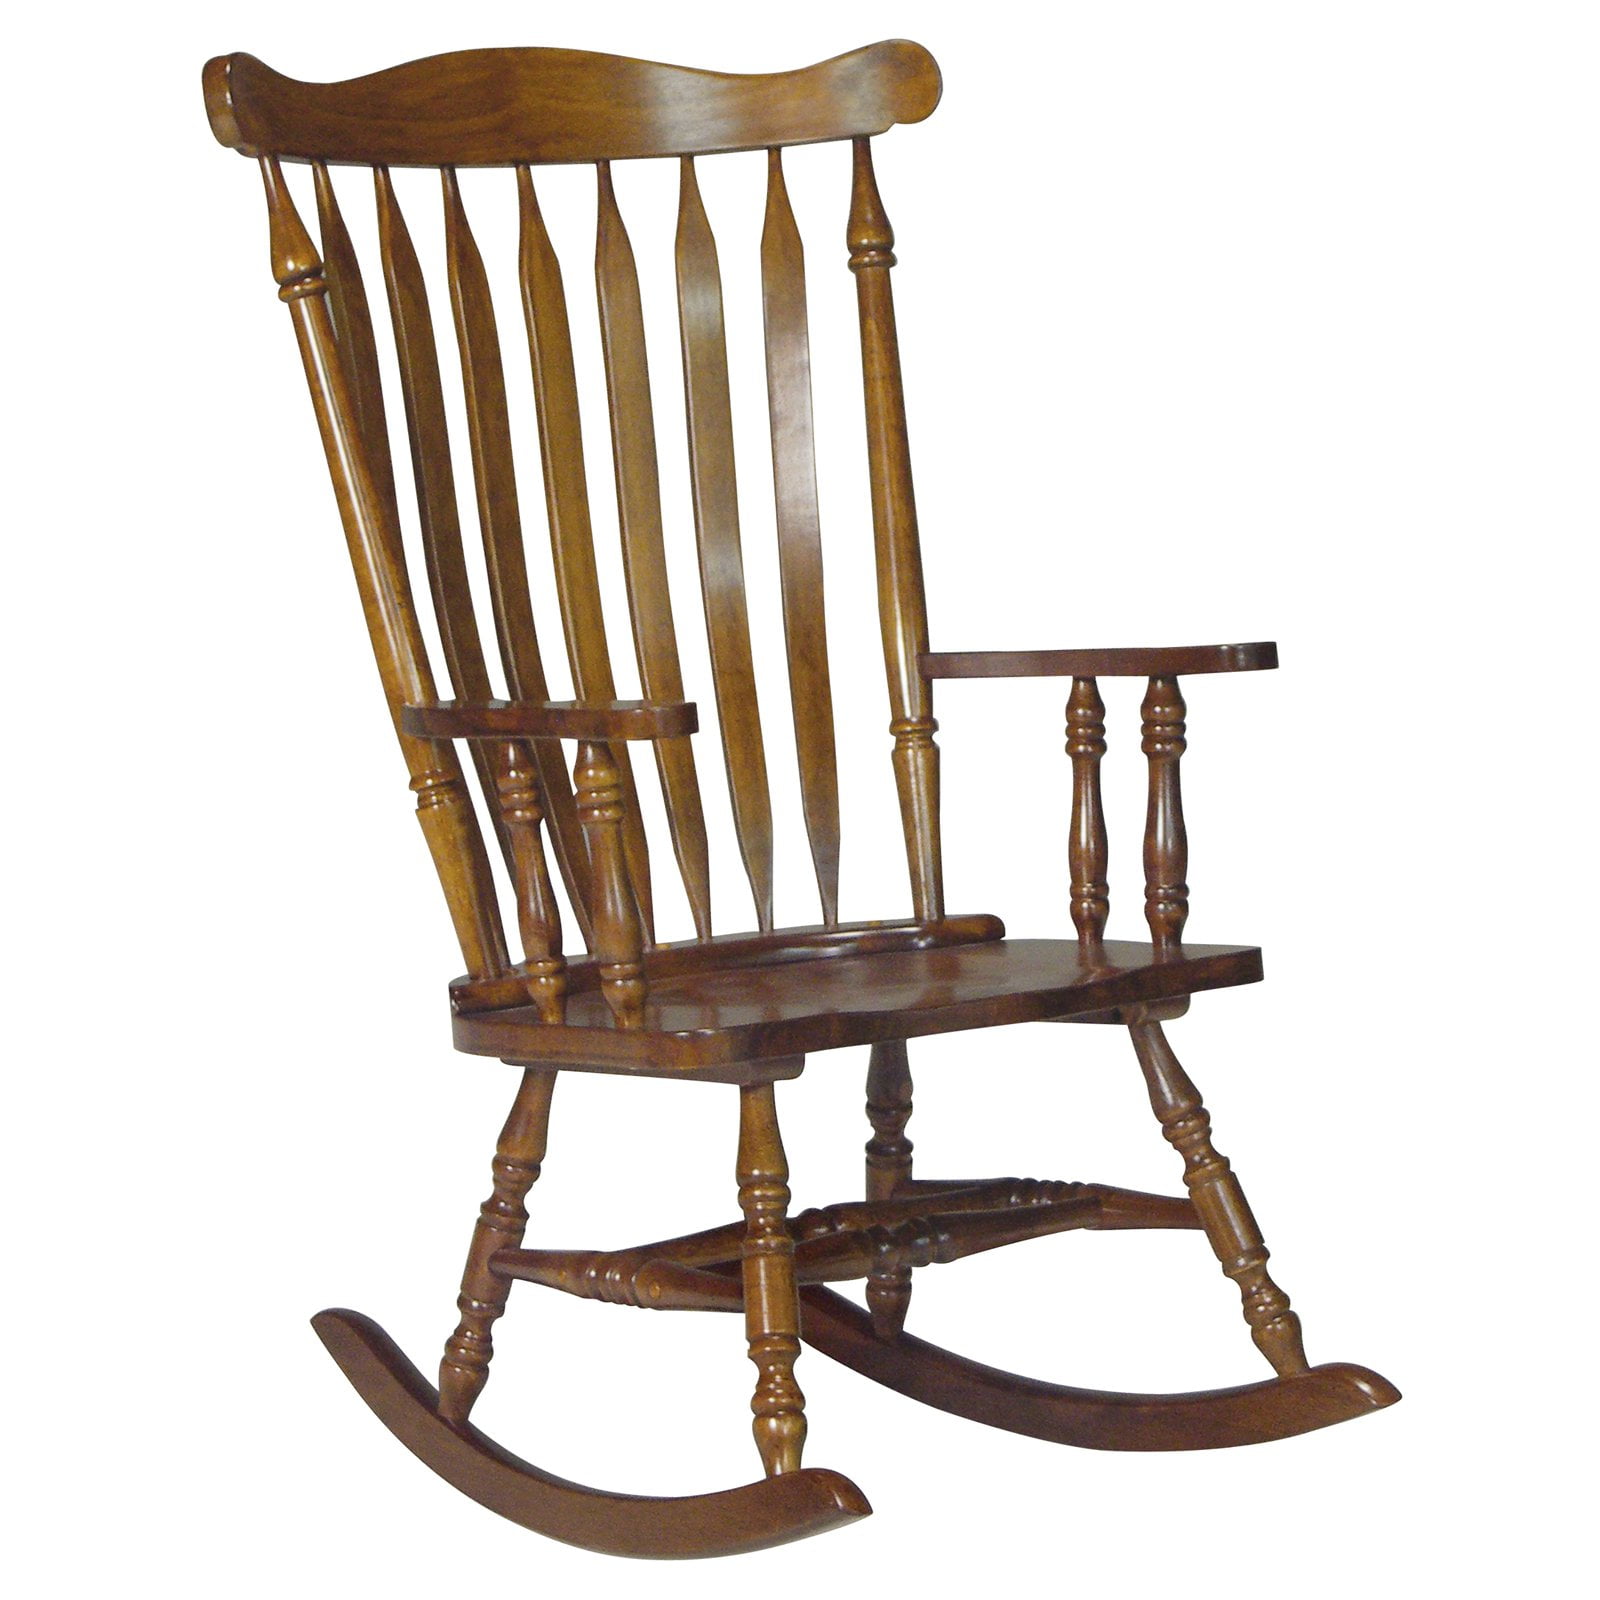 International Concepts Slat-back Indoor Wood Rocking Chair -
Walmart.com - Walmart.com